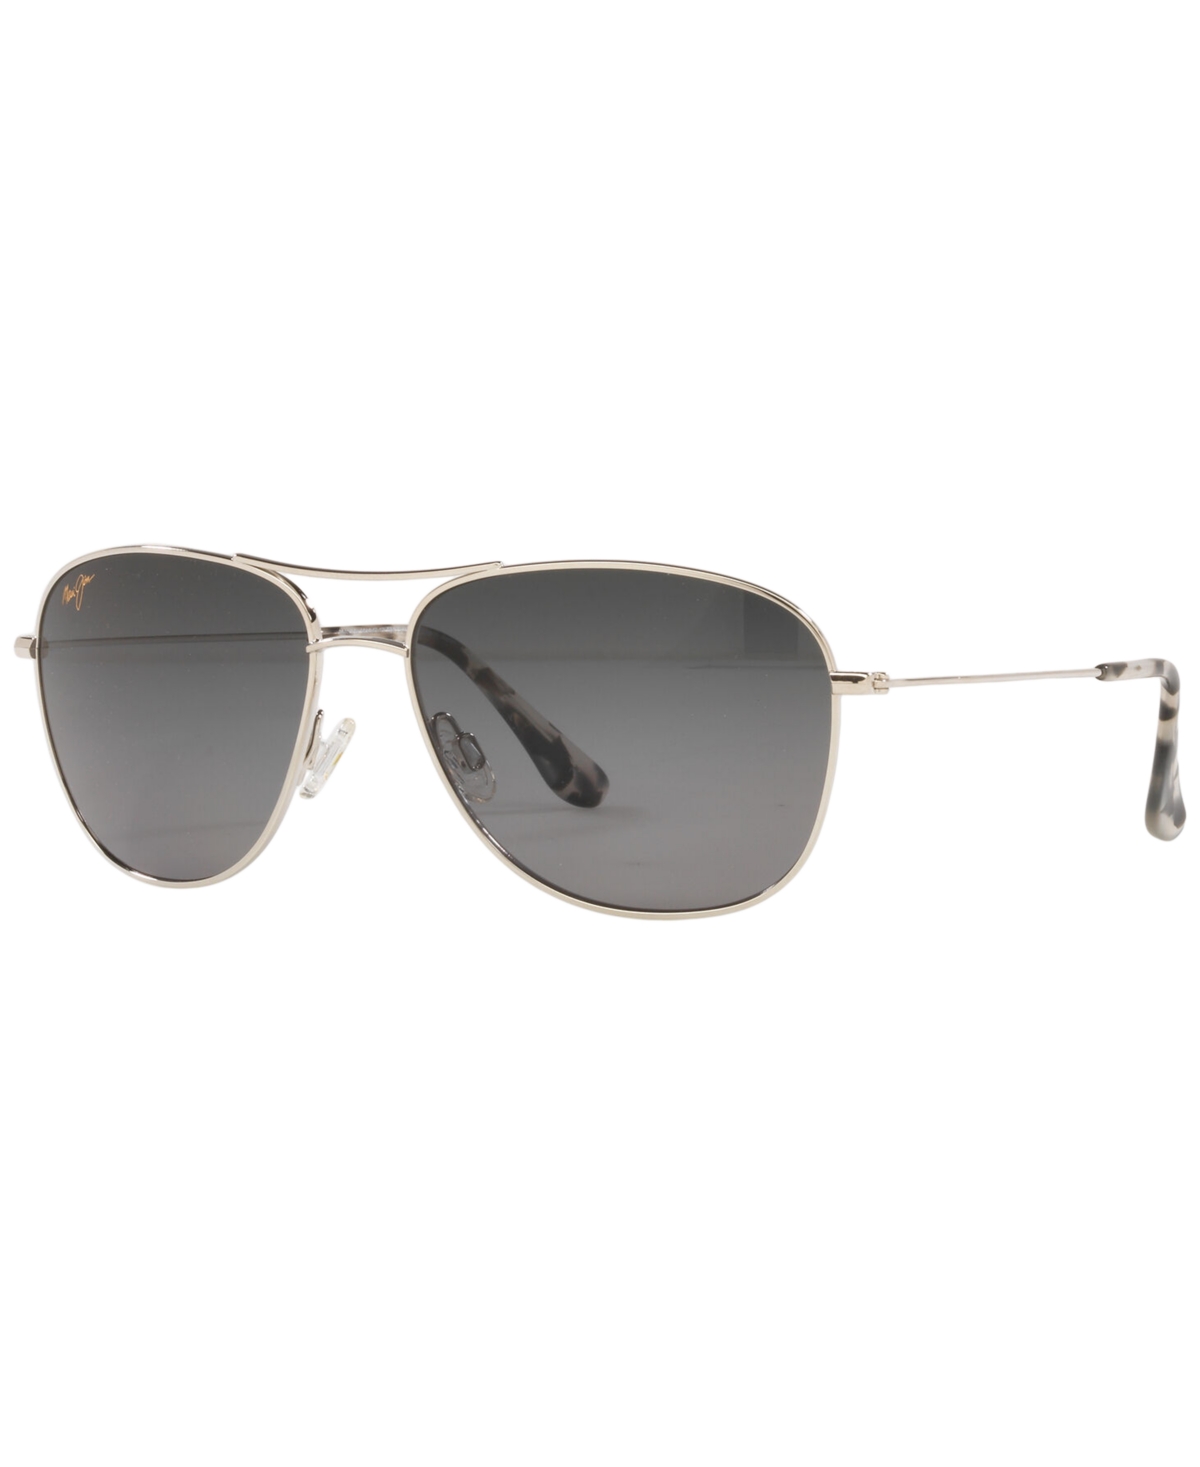 Polarized Cliffhouse Sunglasses, MJ000360 - Gold/Brown